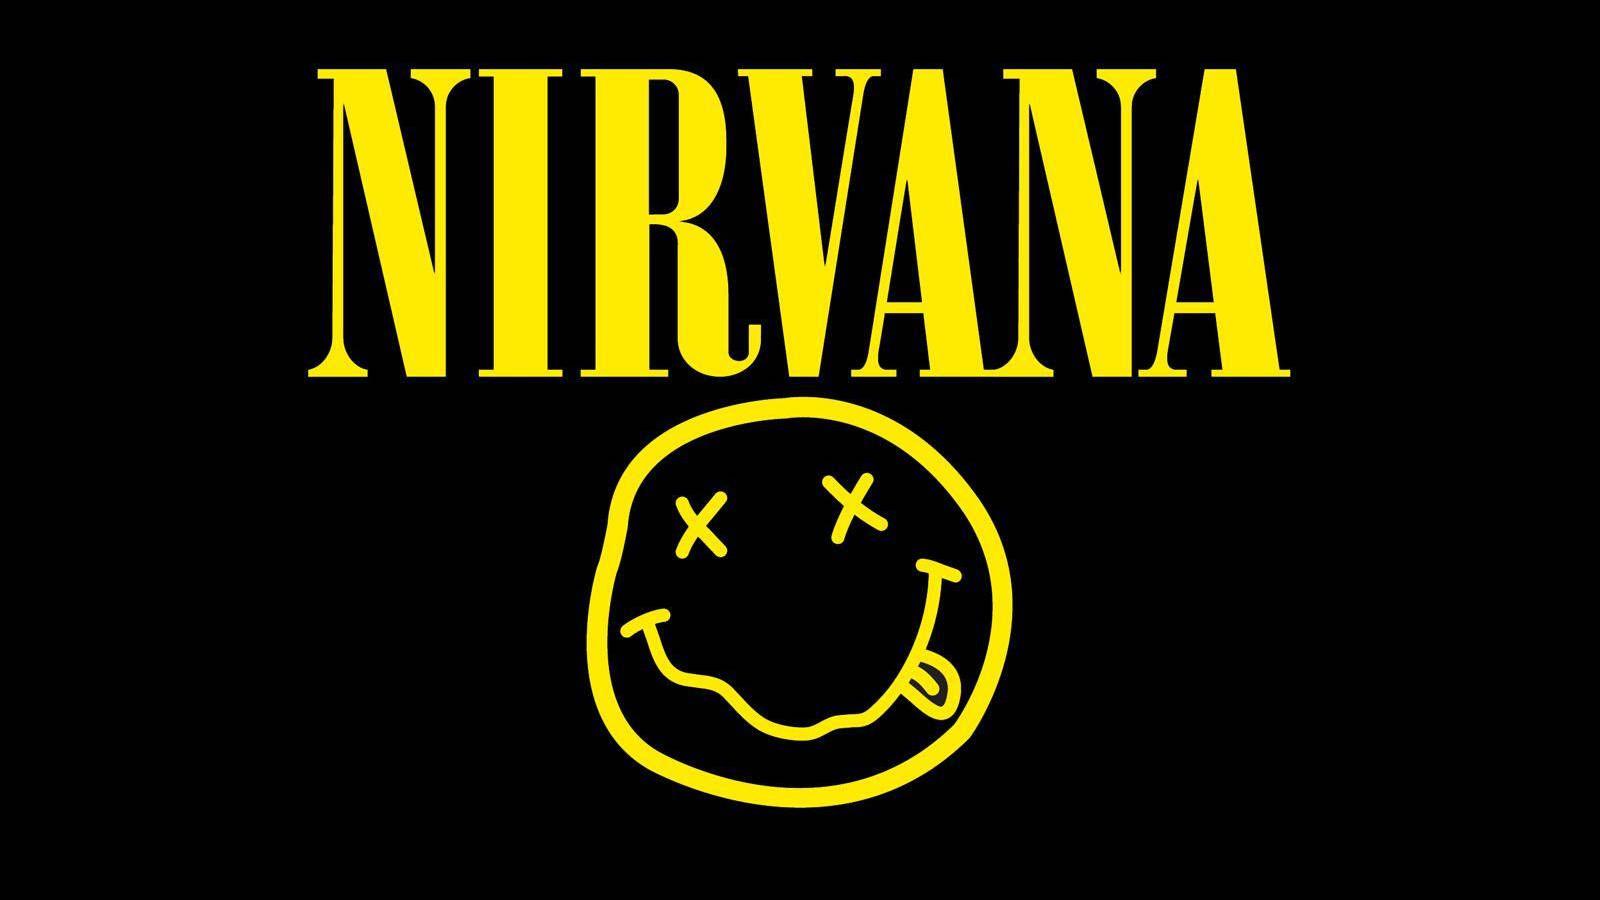 Nirvanna Logo - What Does The Nirvana Smiley Face Logo Mean? - Radio X